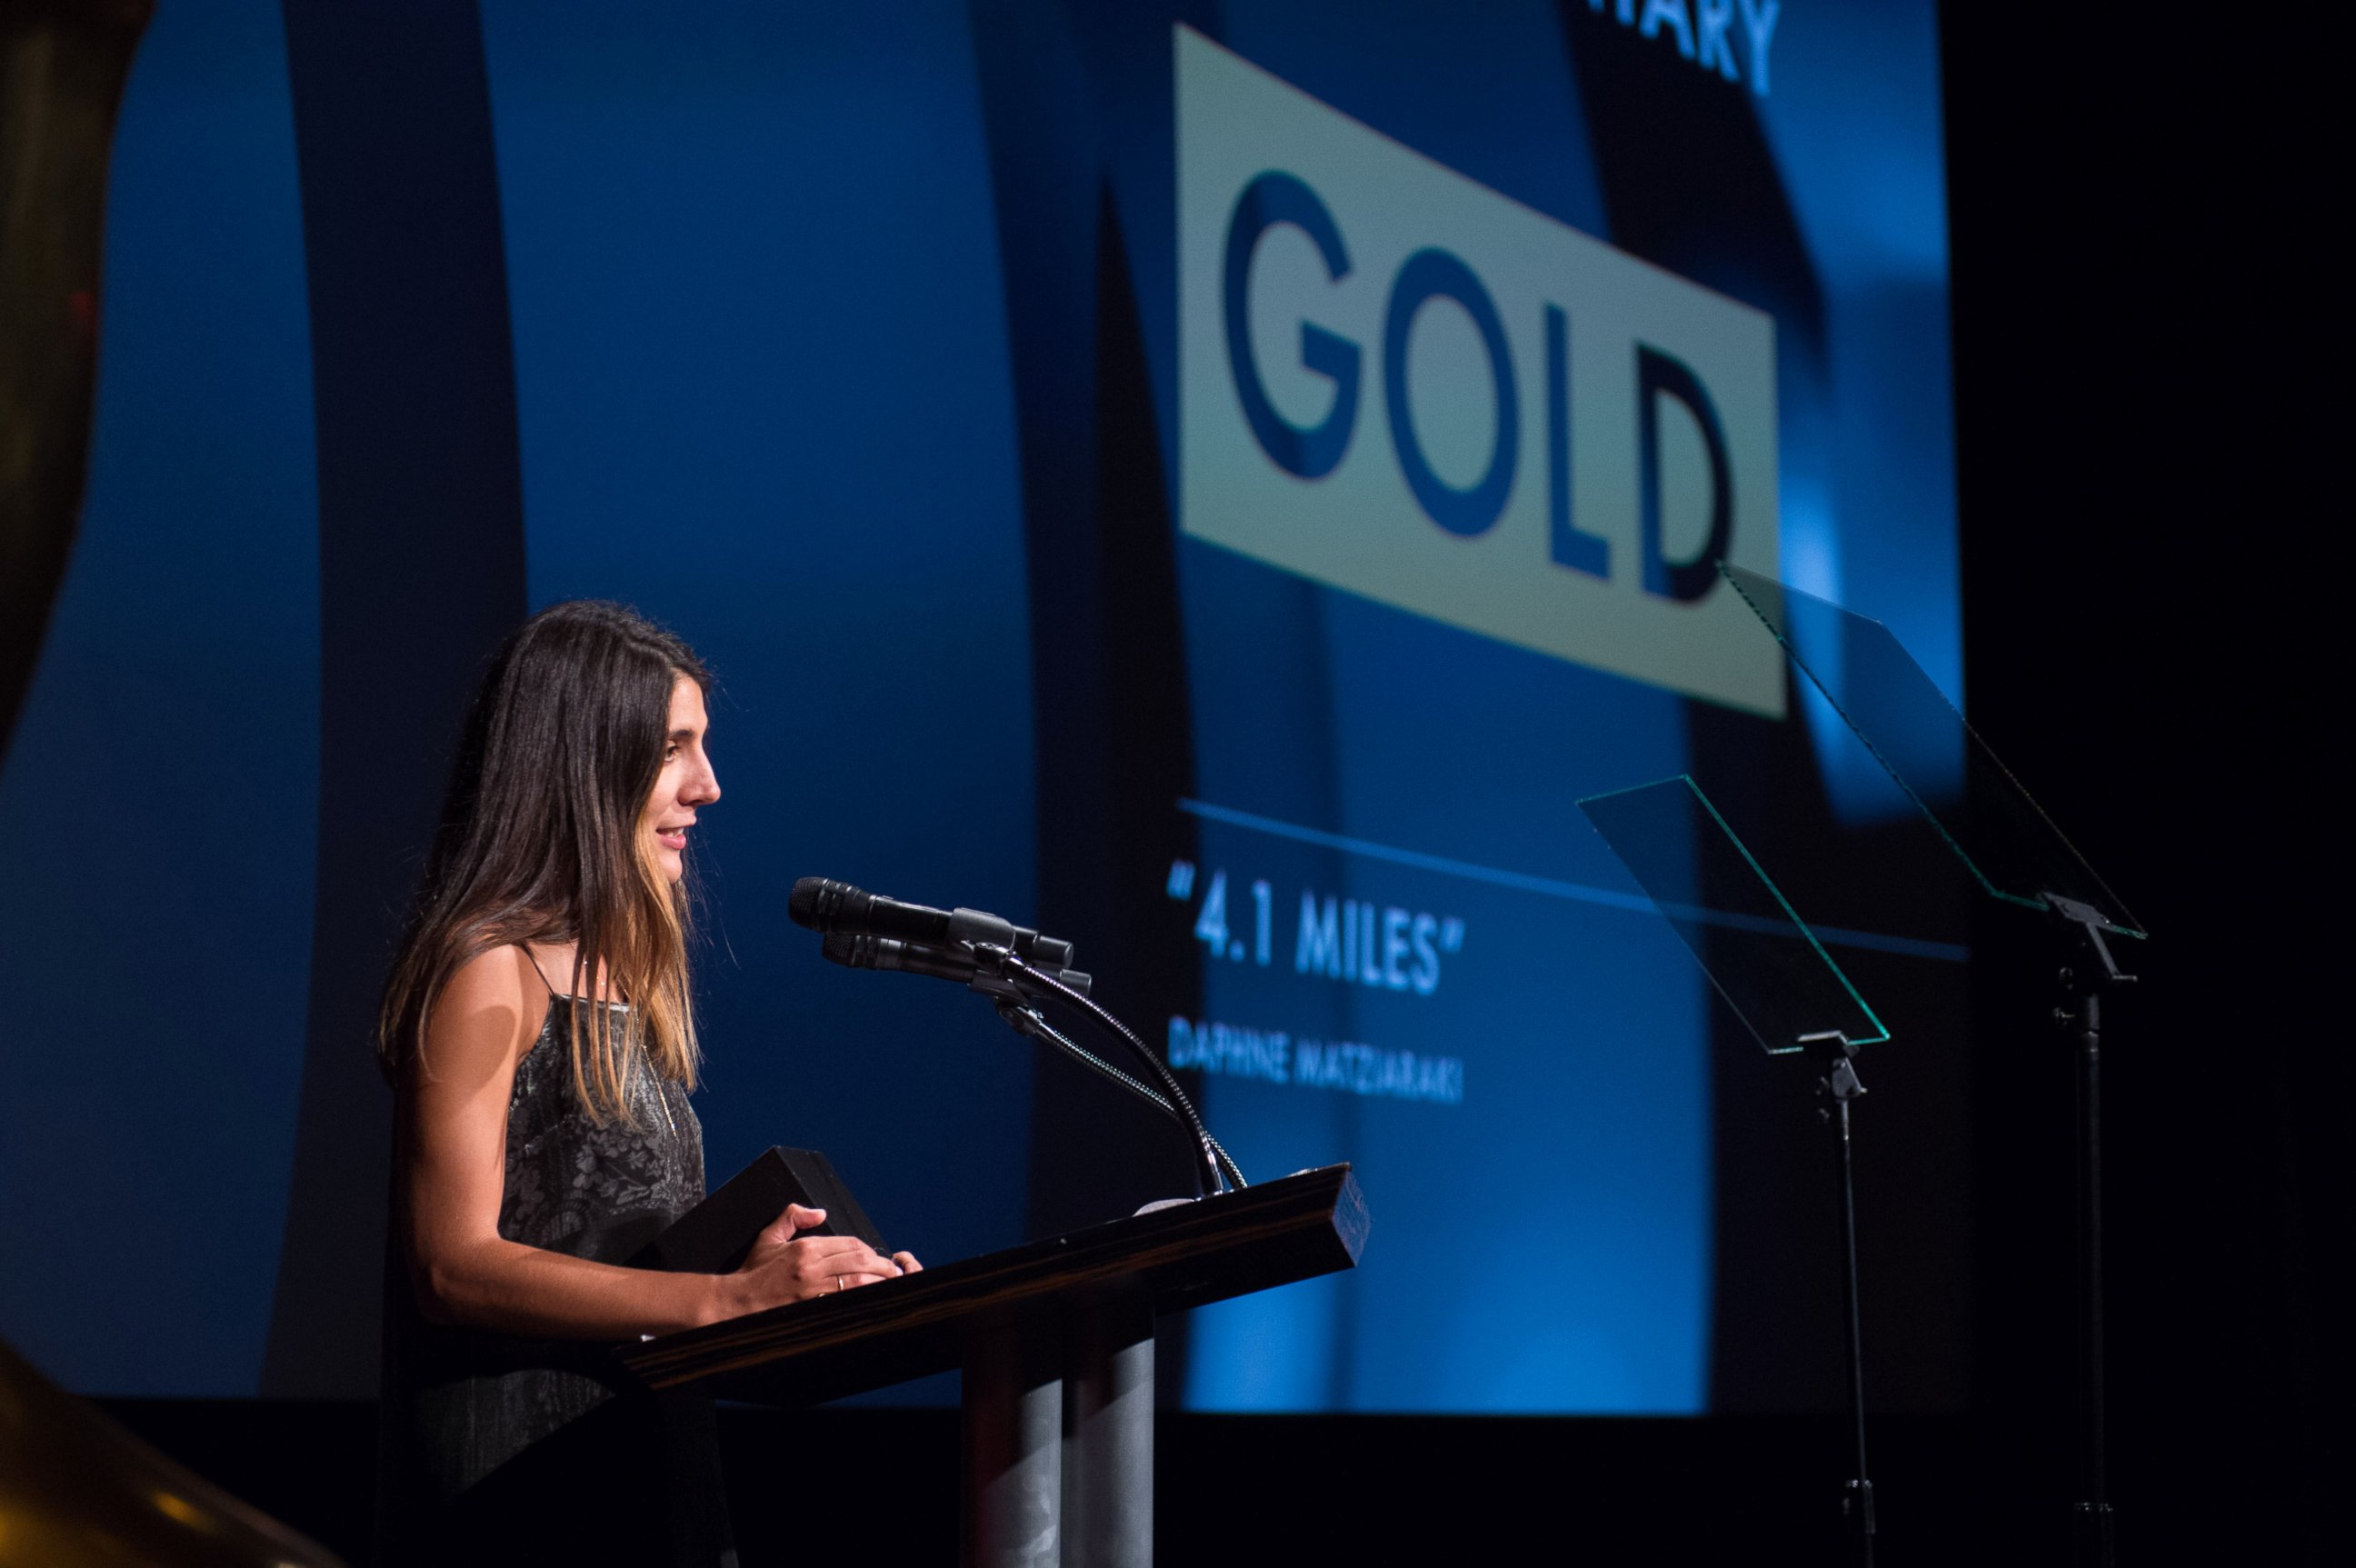 PHOTO: Daphne Matziaraki, winner of the gold medal in the documentary film category for "4.1 Miles," during the 43rd Annual Student Academy Awards on Sept. 22, 2017 in Beverly Hills, Calif..